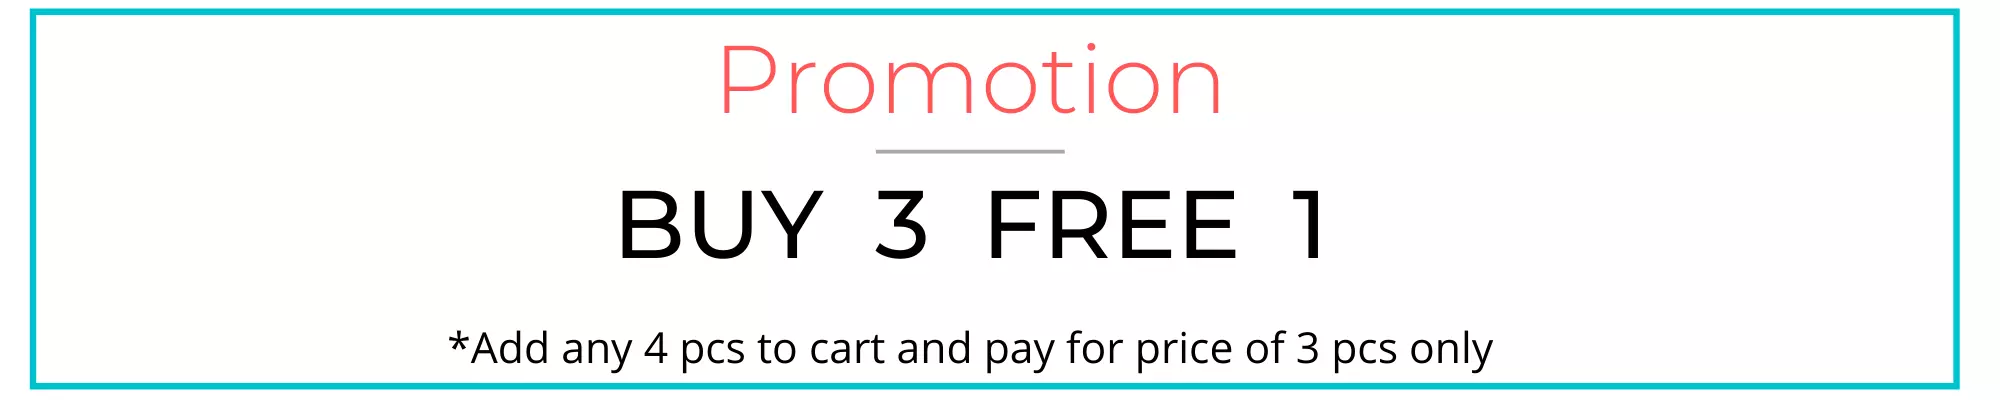 MeTime Art Buy 3 Free 1 Promotion